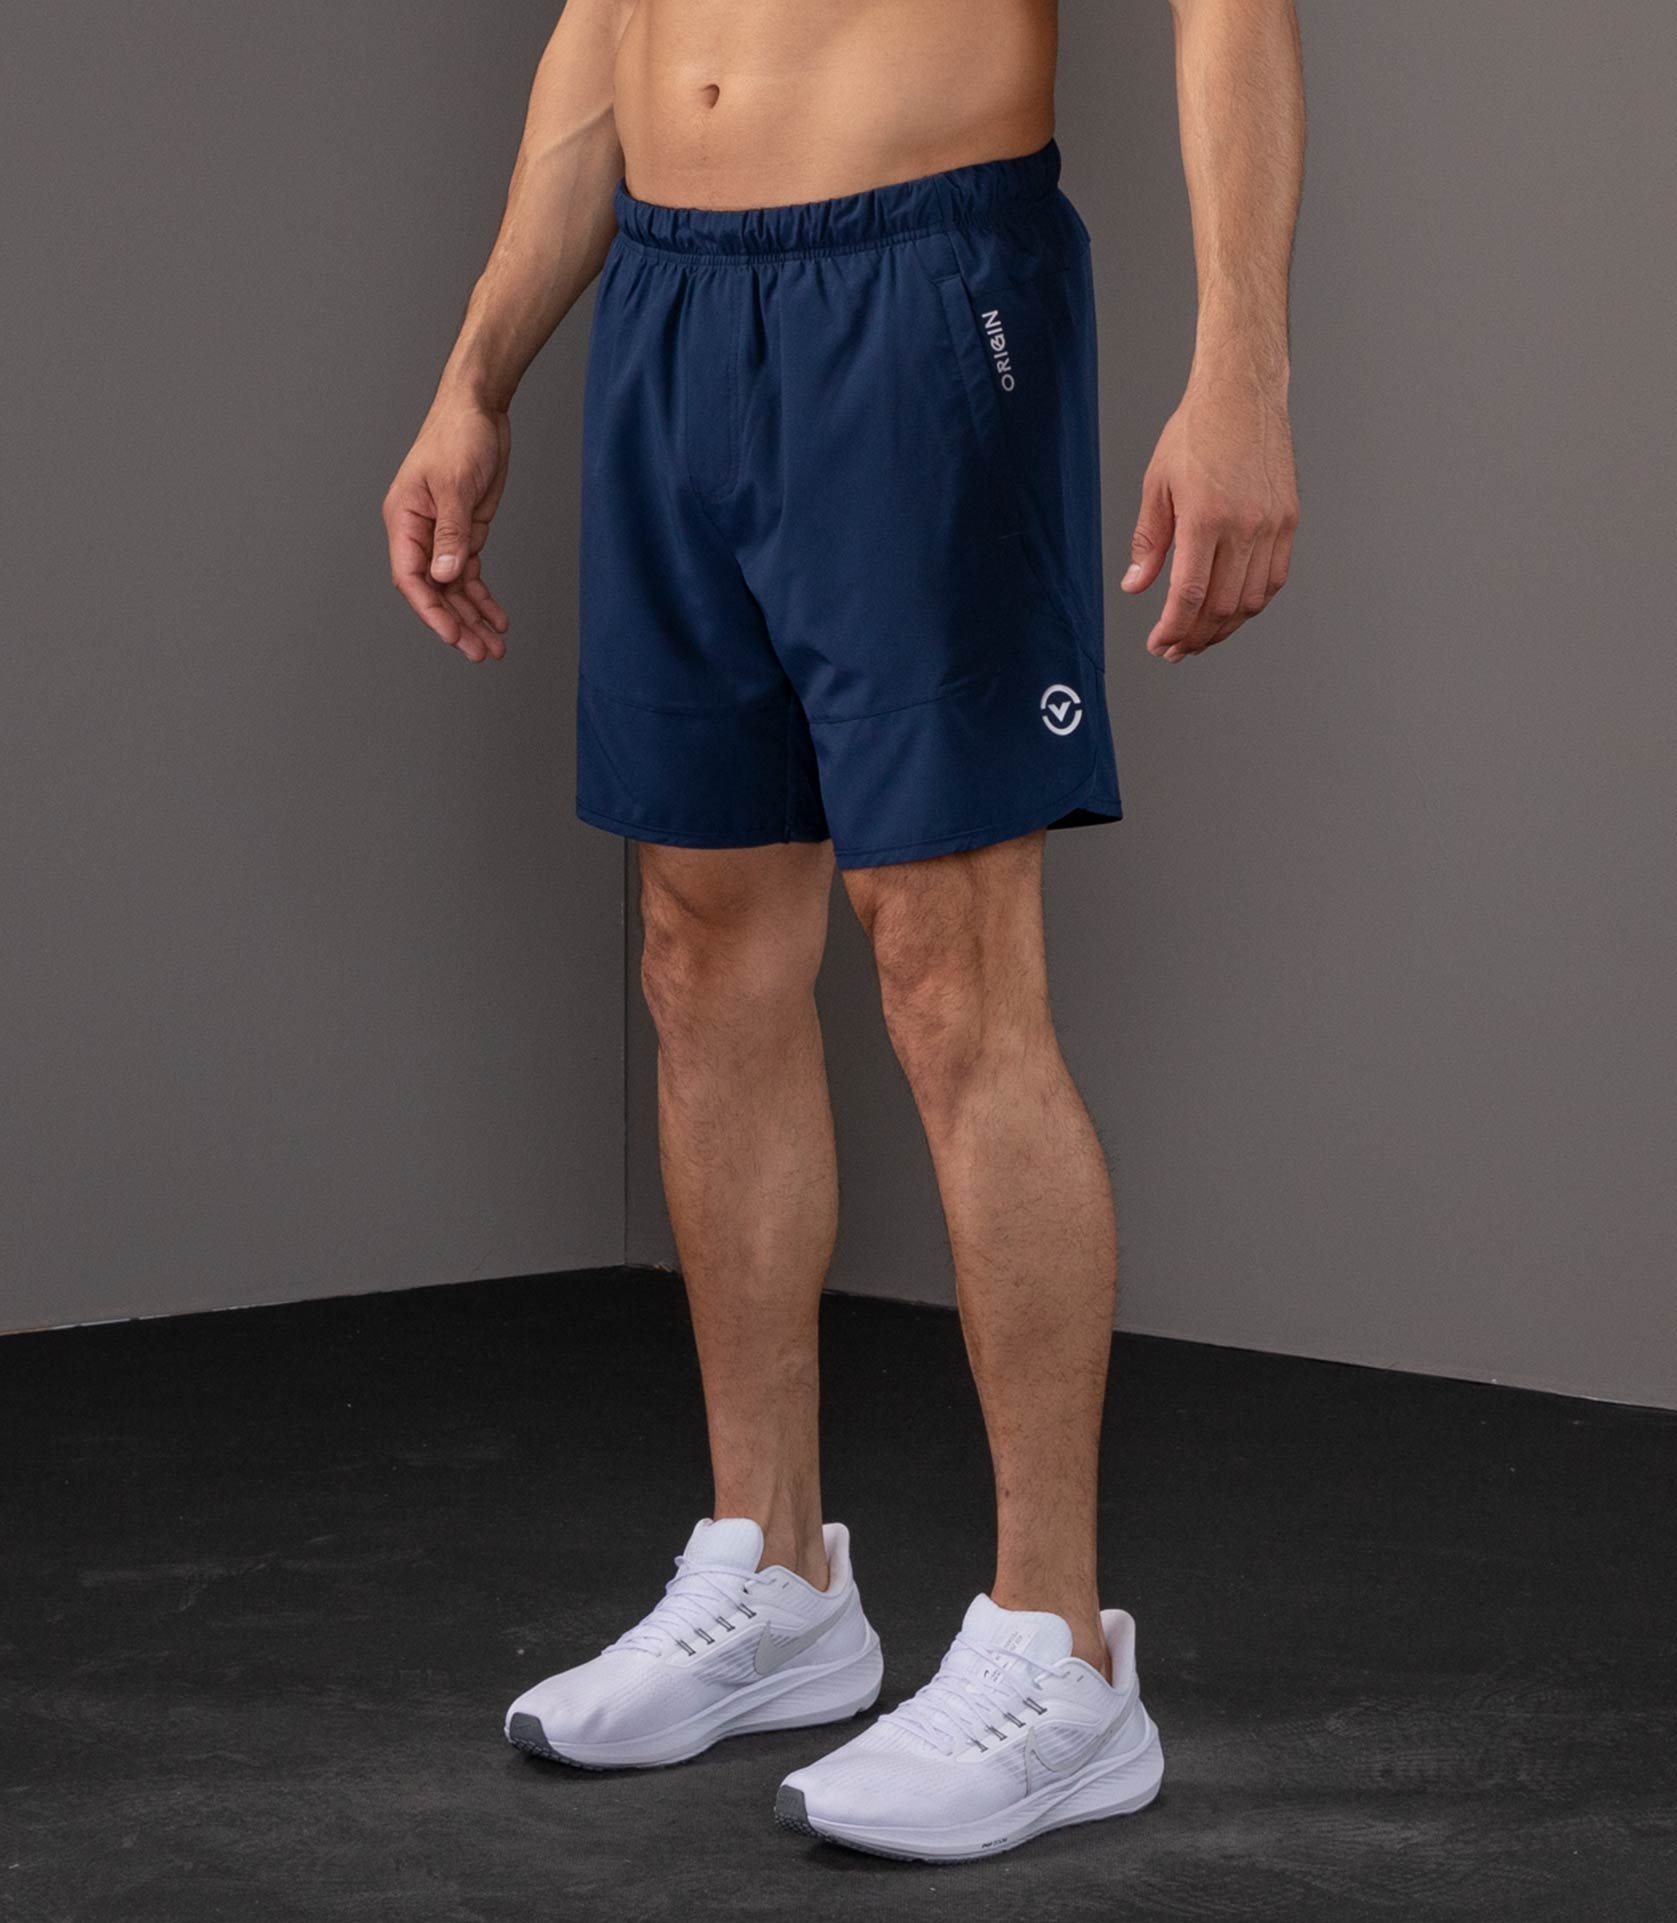 Men's shorts ⇒ Buy the best workout shorts for men | VIRUS EU